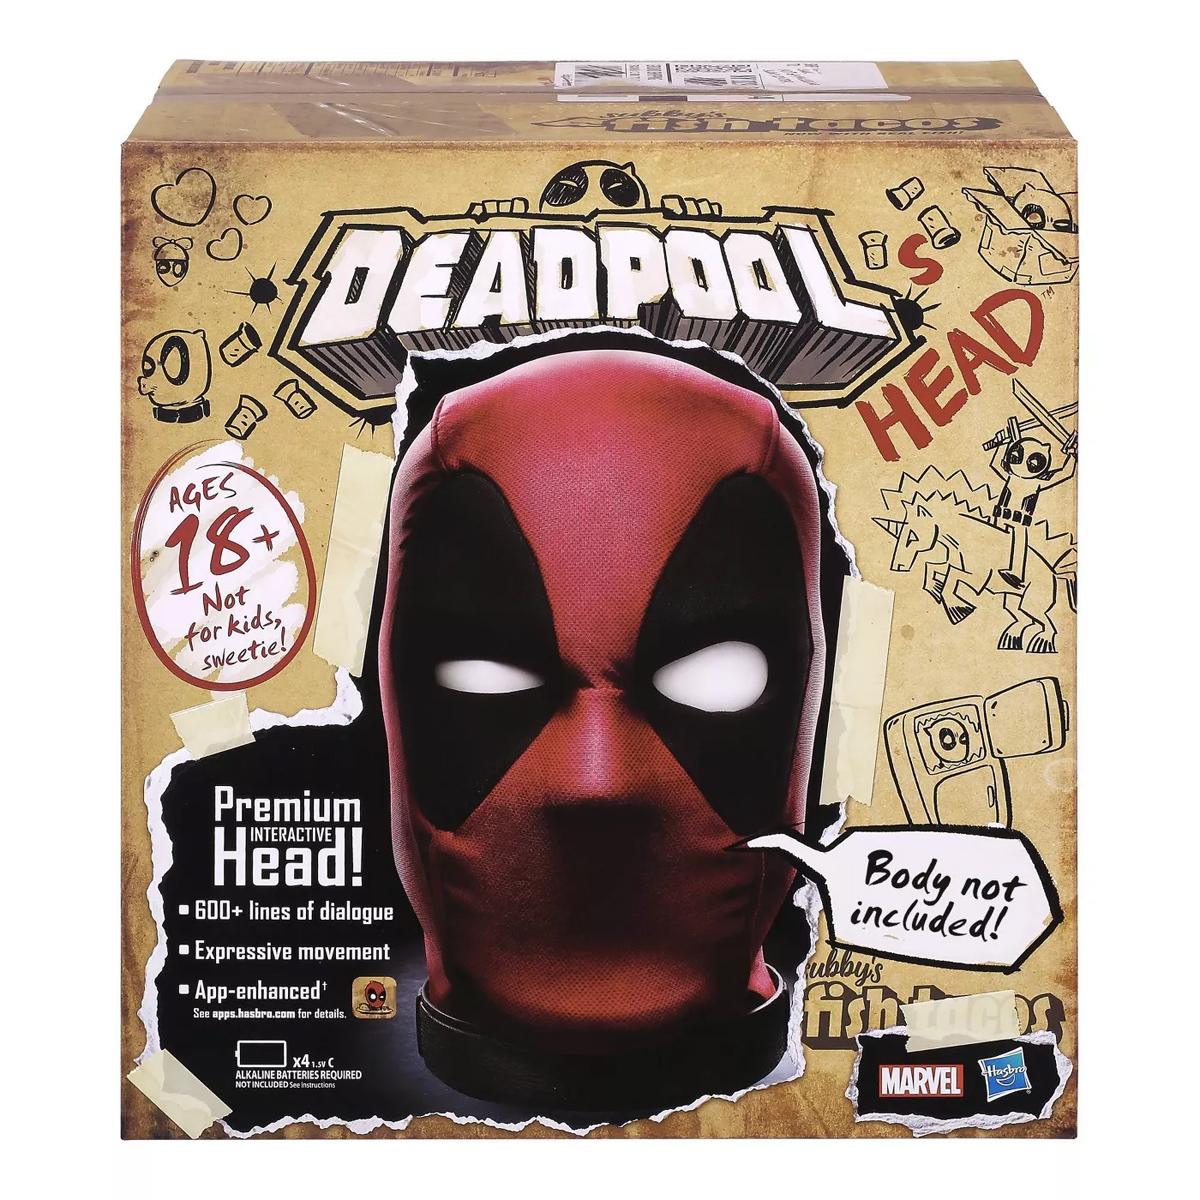 Marvel Legends Deadpool's Head Premium Interactive Head for $49.99 Shipped